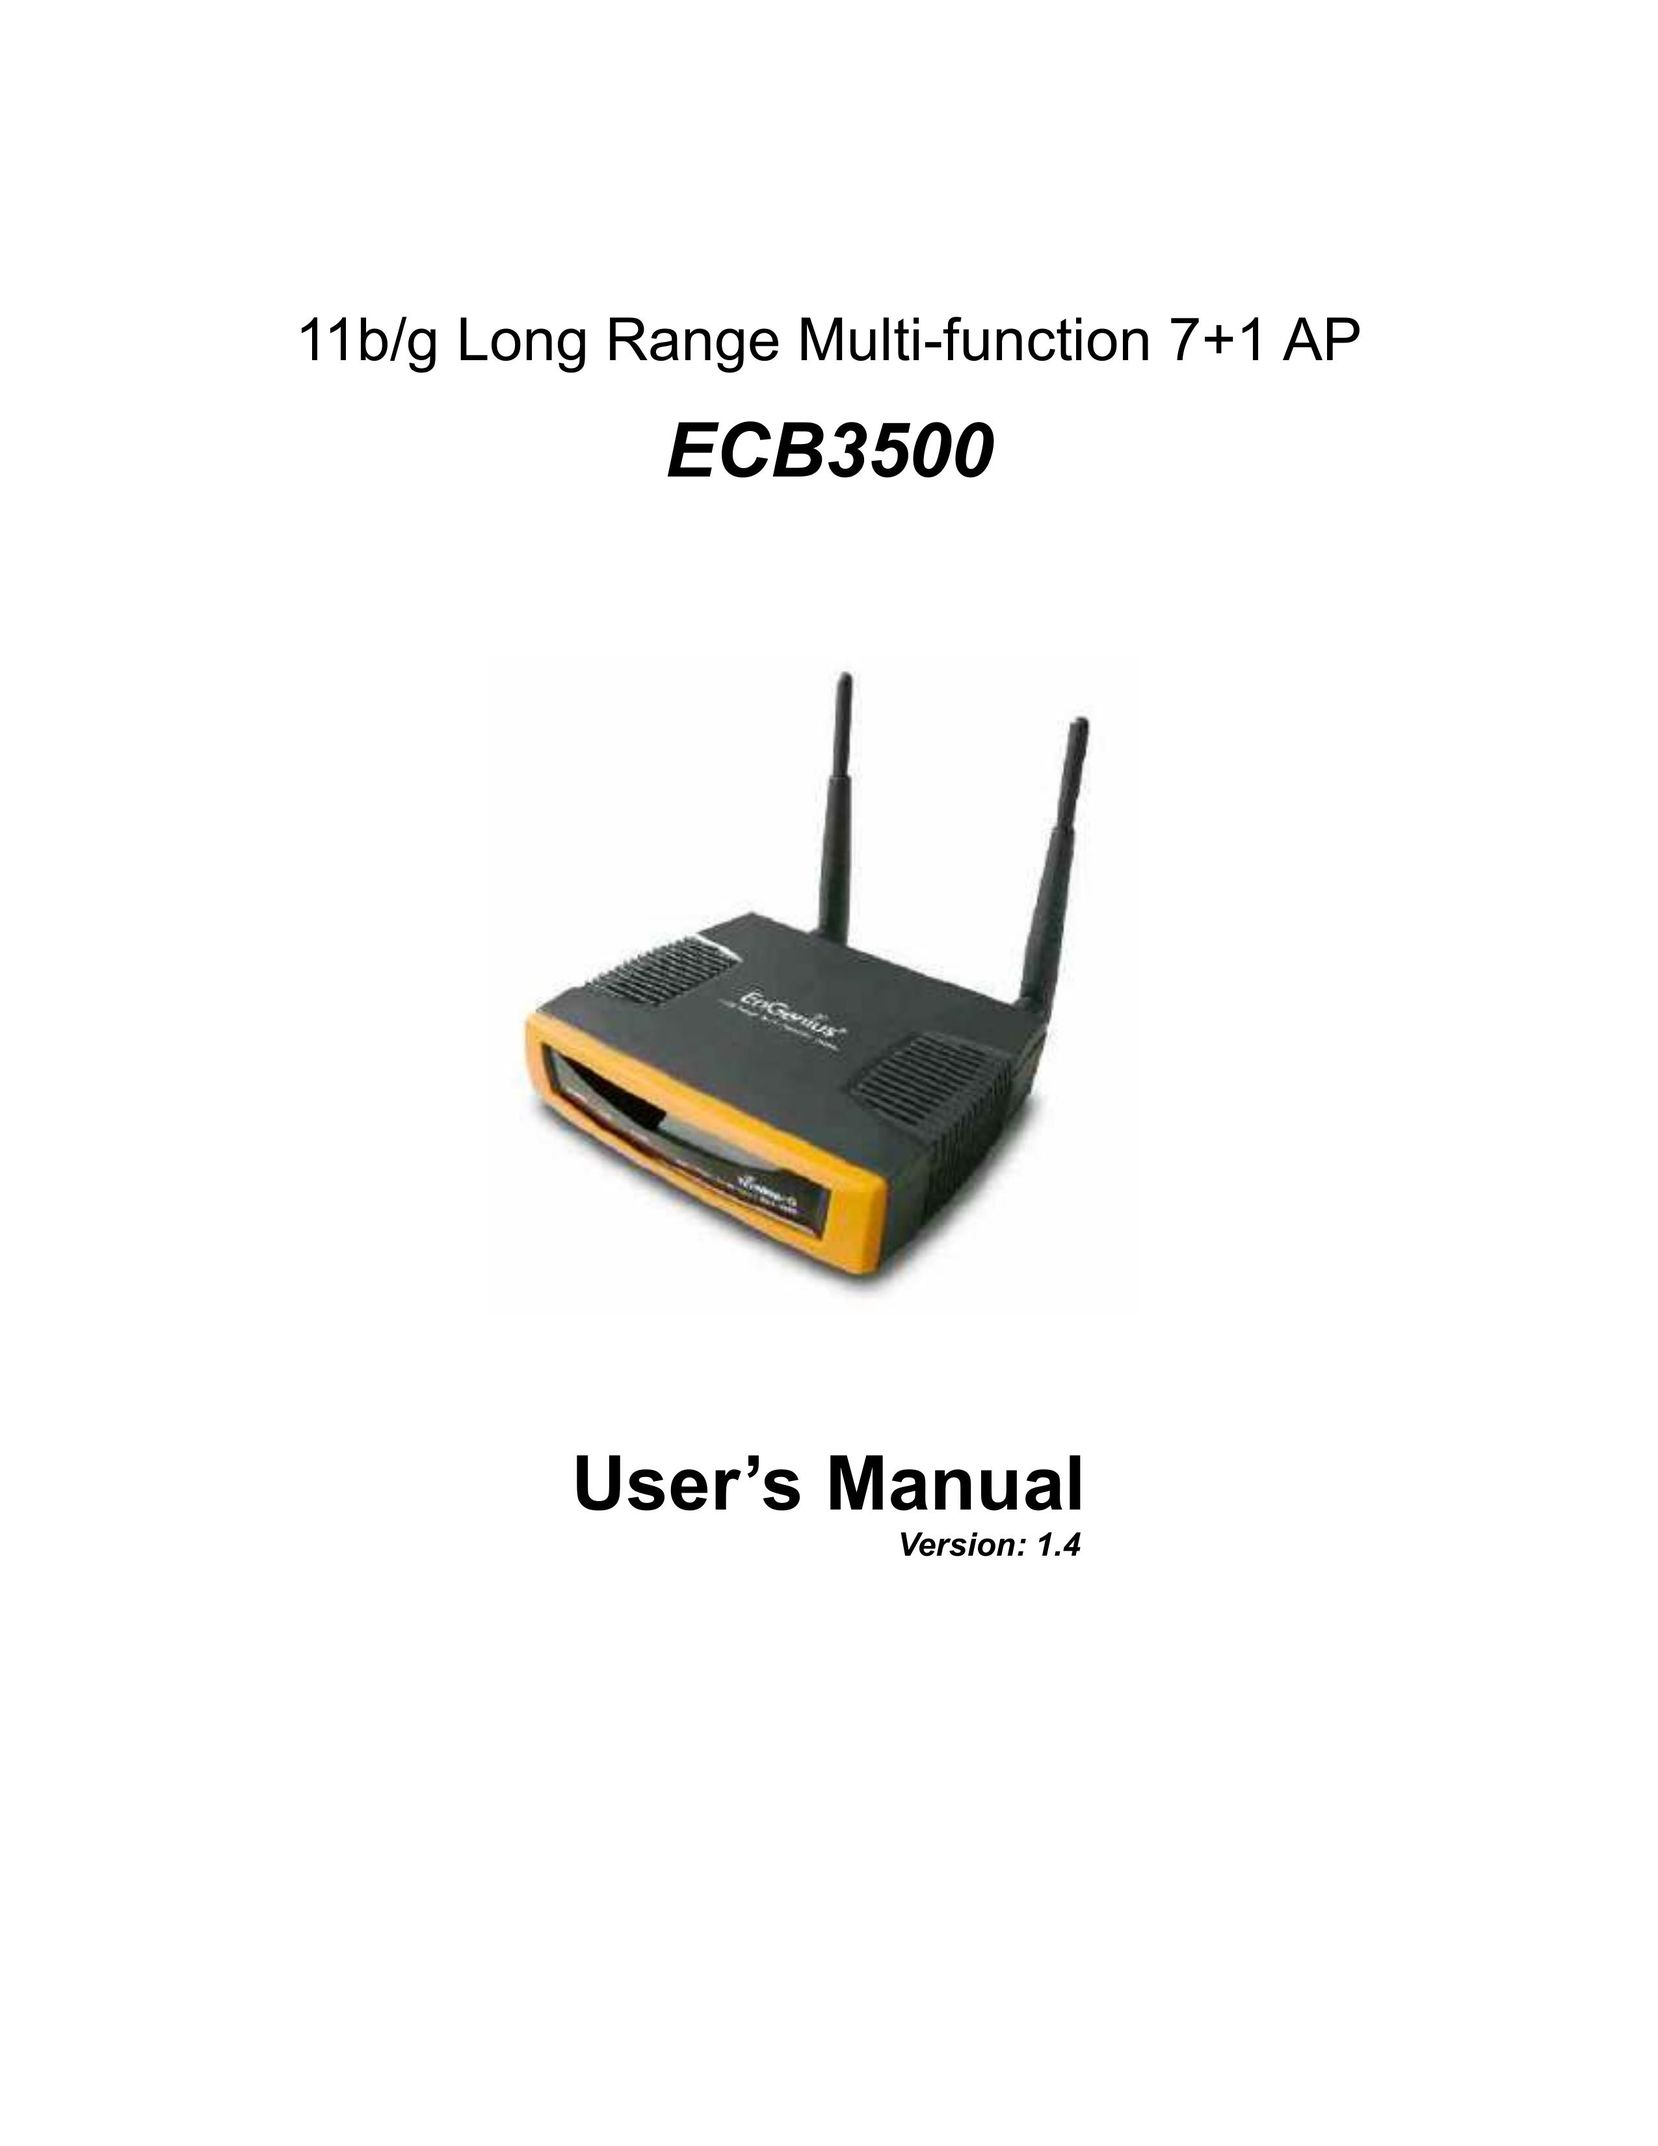 EnGenius Technologies ECB3500 Network Router User Manual